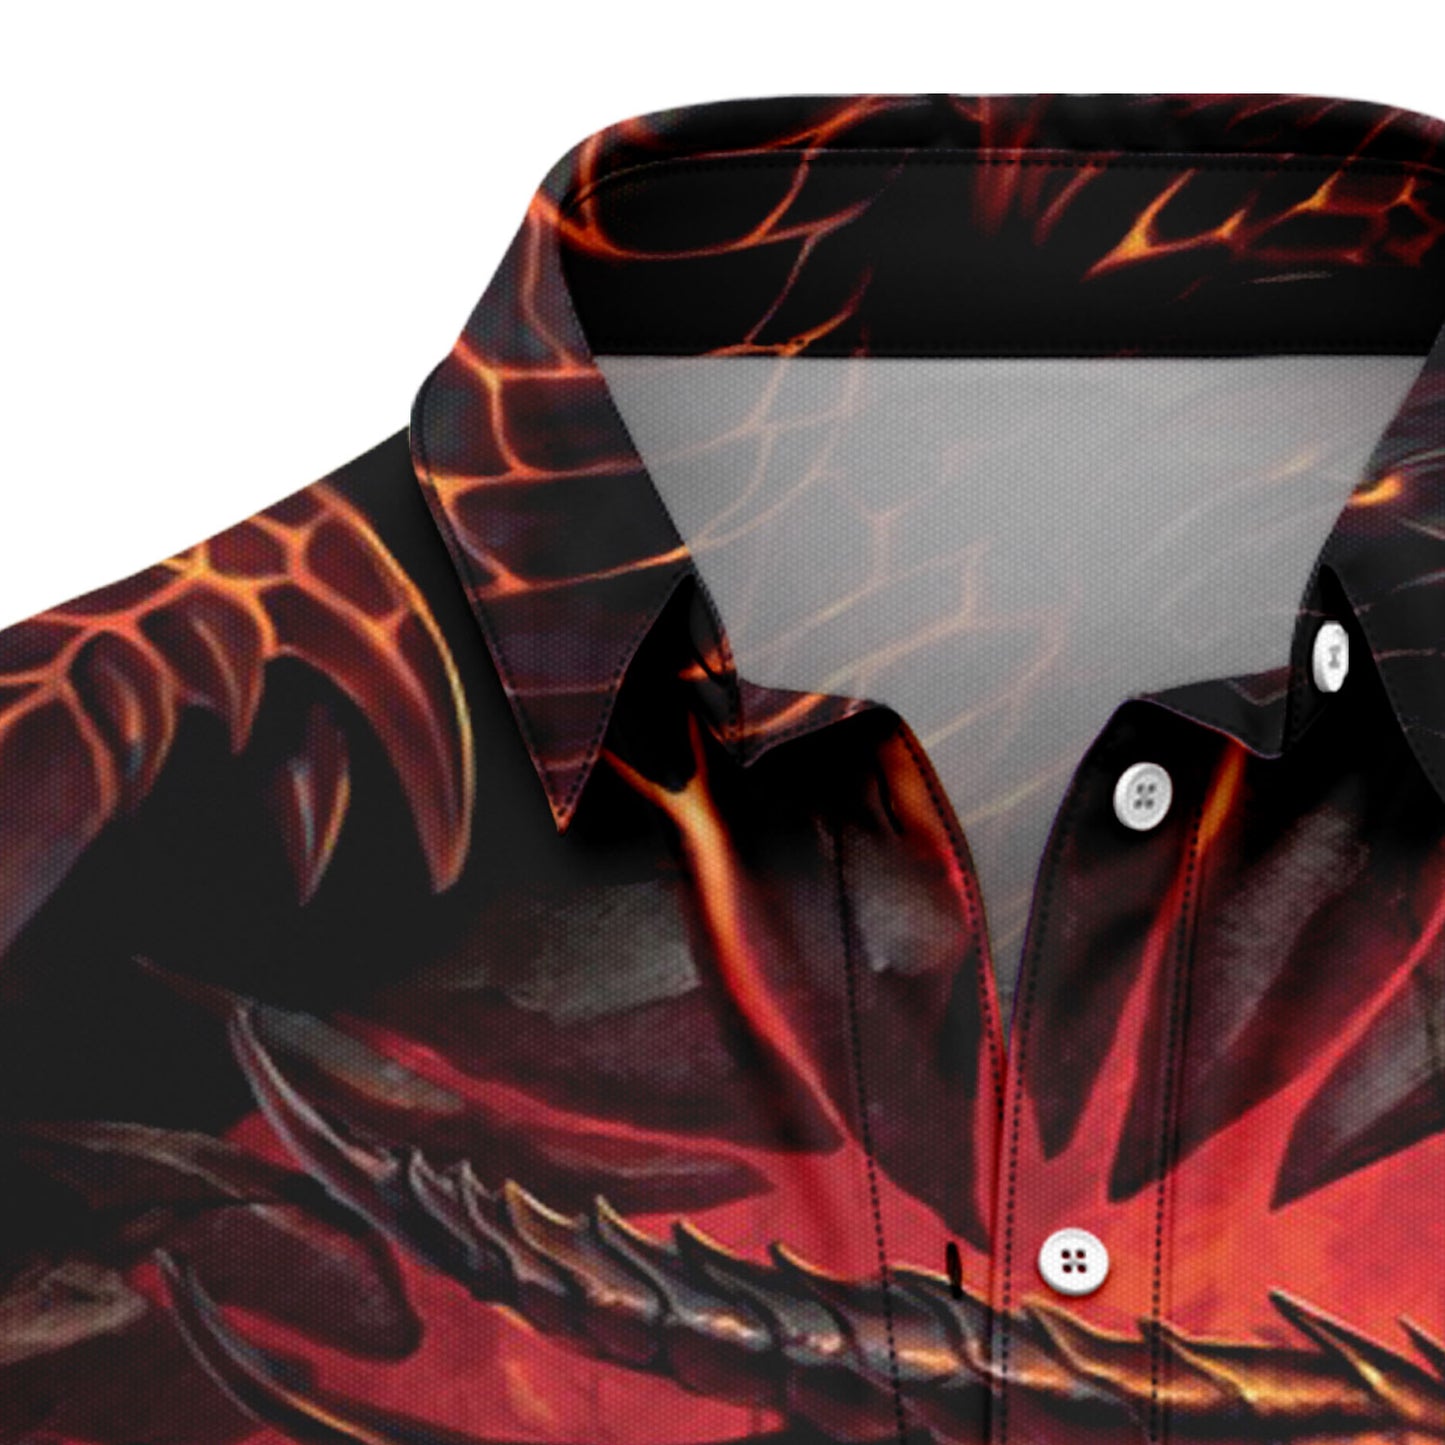 Mythical Dragon H2702 Hawaiian Shirt